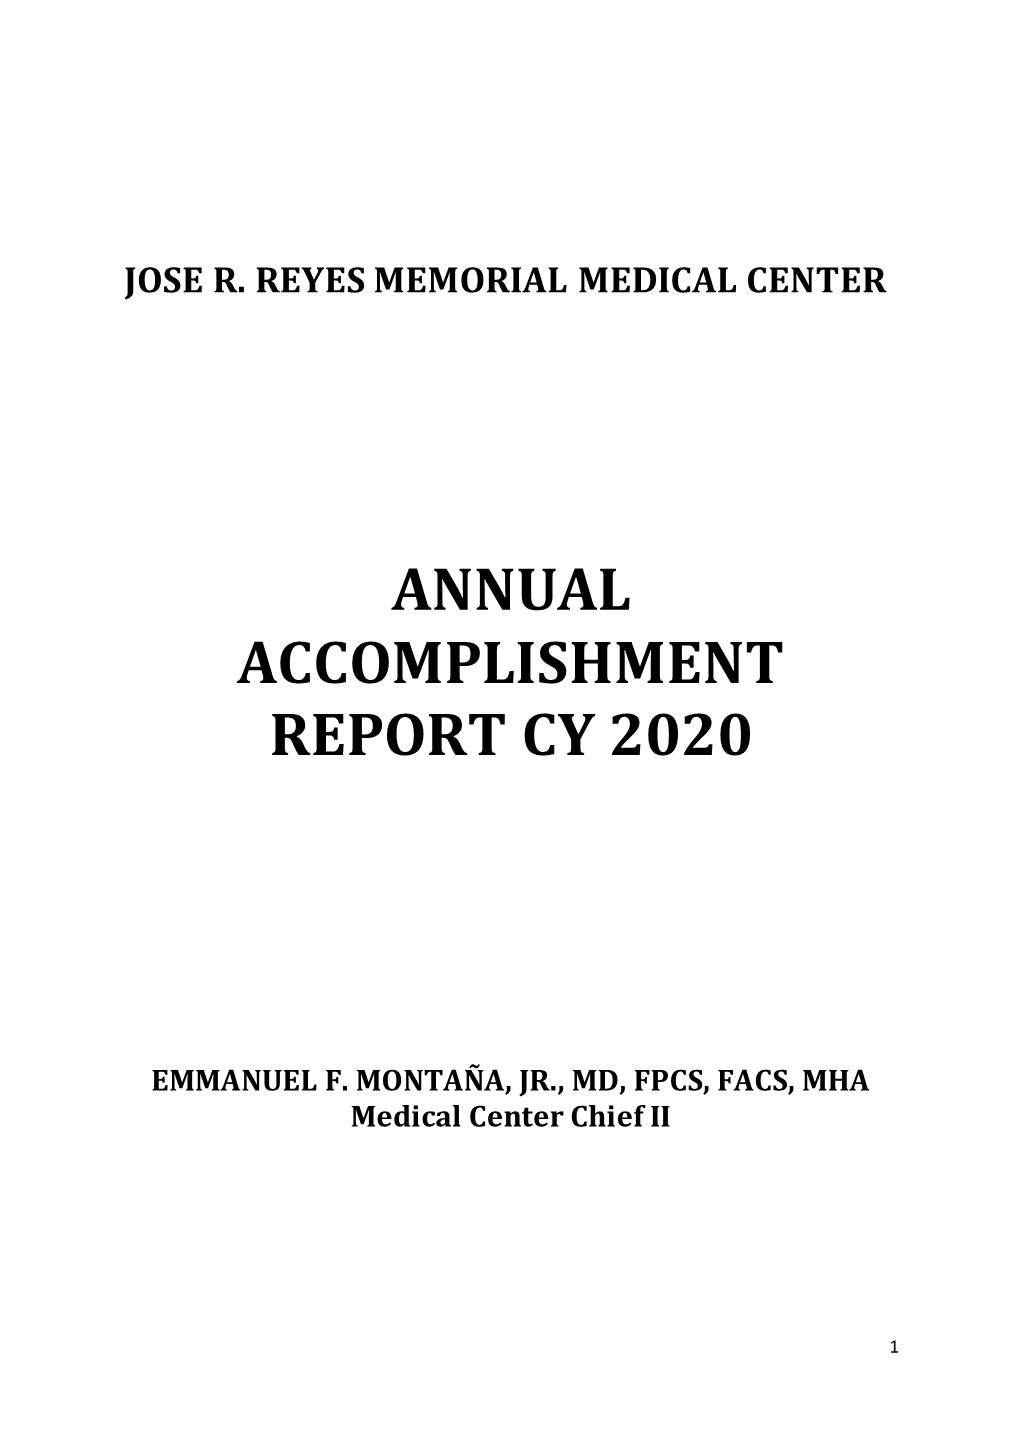 Annual Accomplishment Report Cy 2020